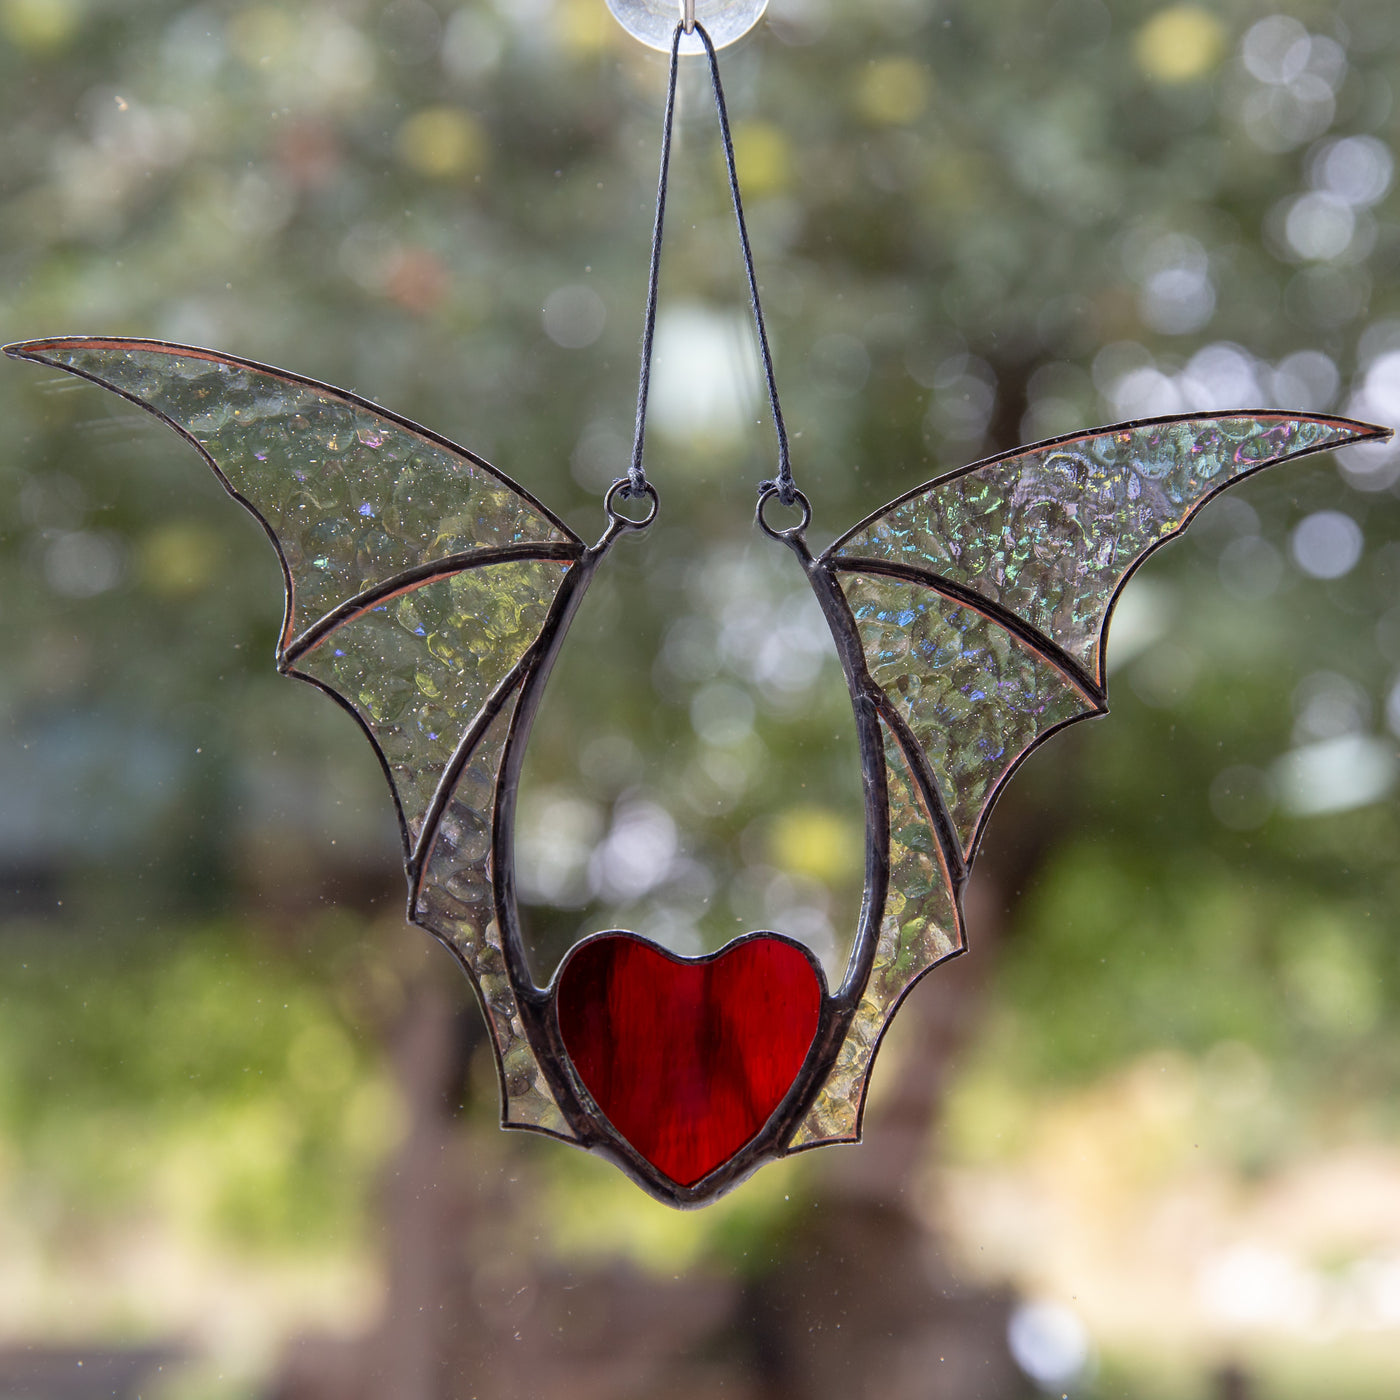 Iridescnent-winged stained glass red heart Halloween suncatcher